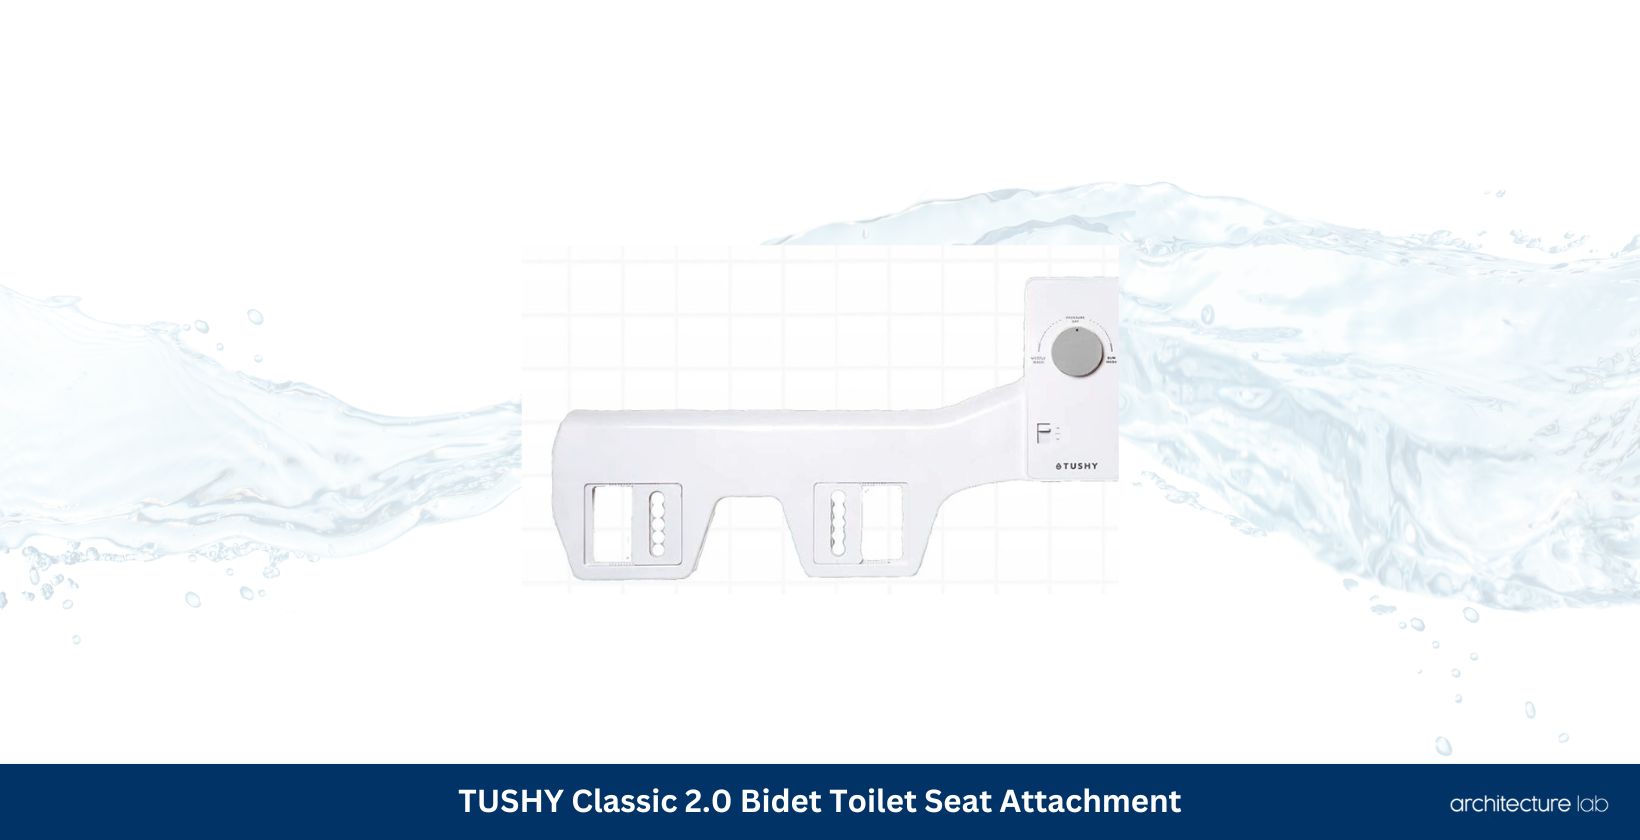 Tushy classic 2. 0 bidet toilet seat attachment